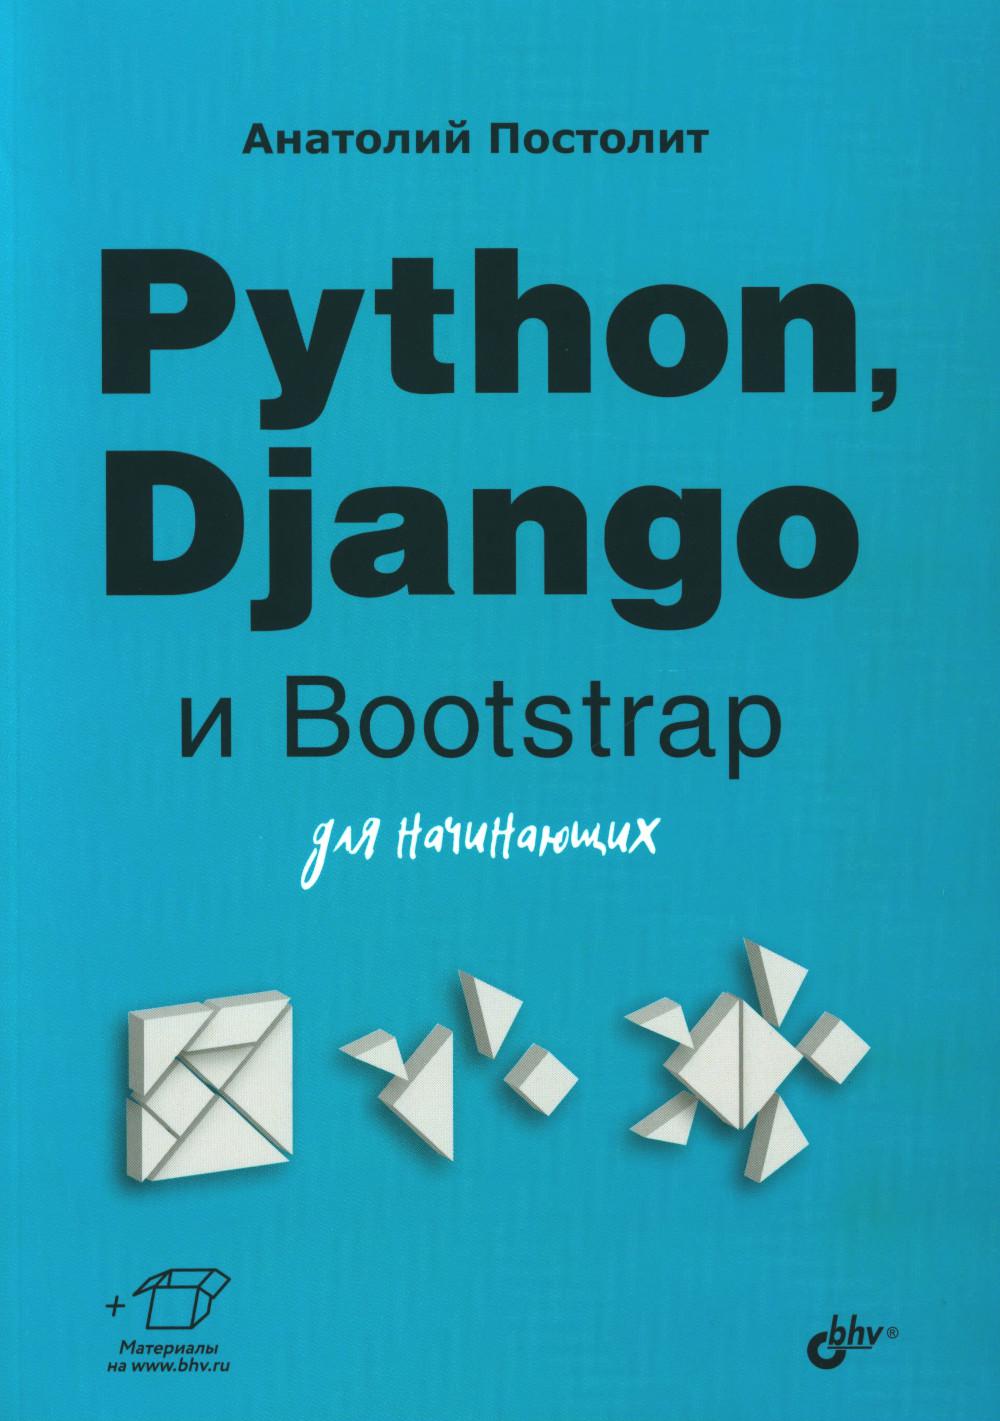 Python, Django  Bootstrap  .